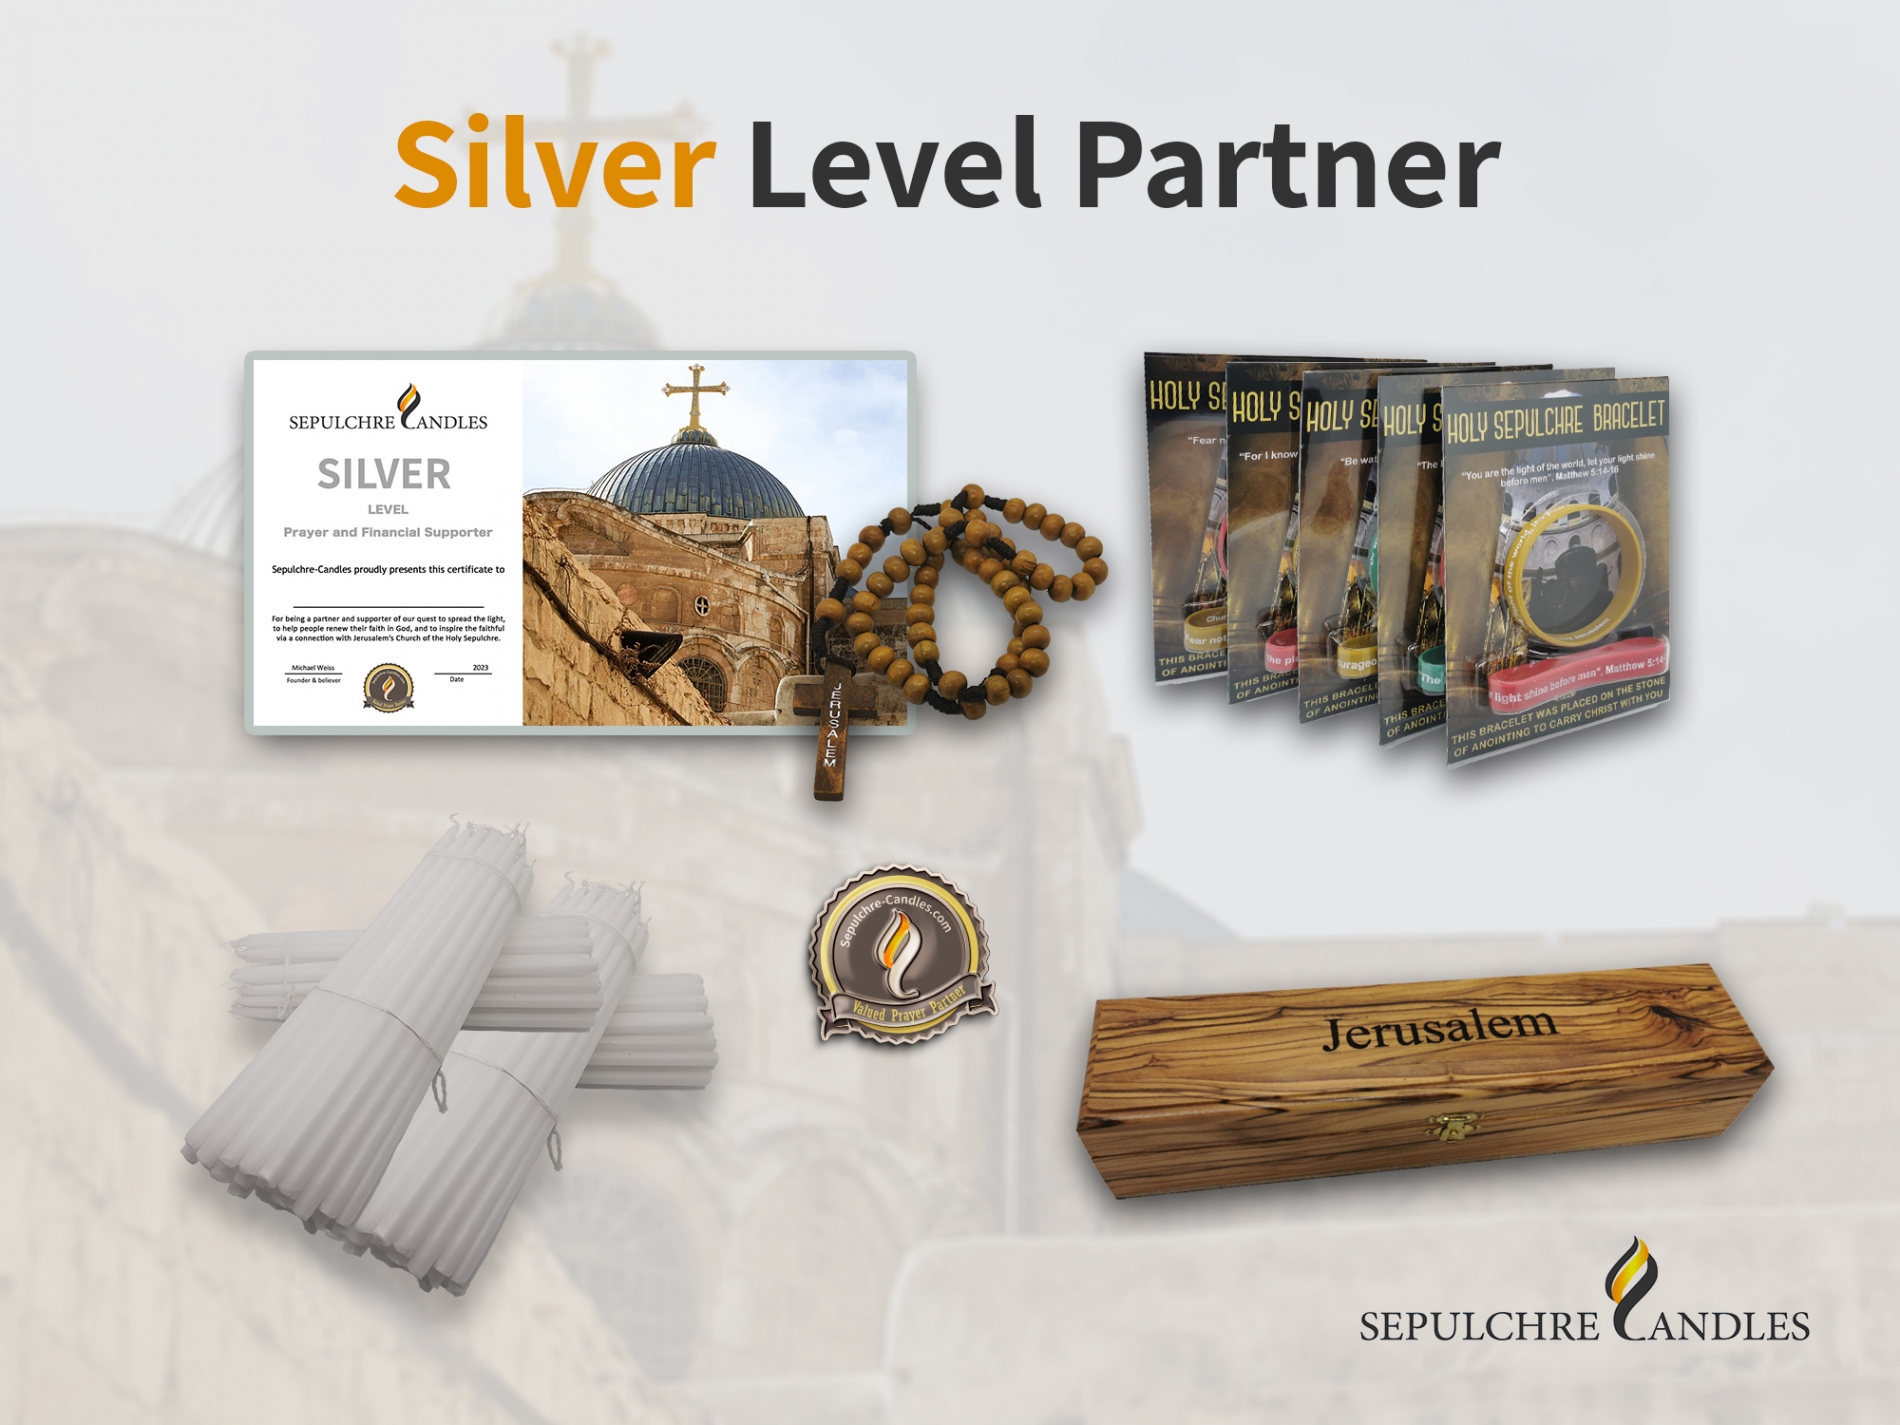 Silver Level Partner